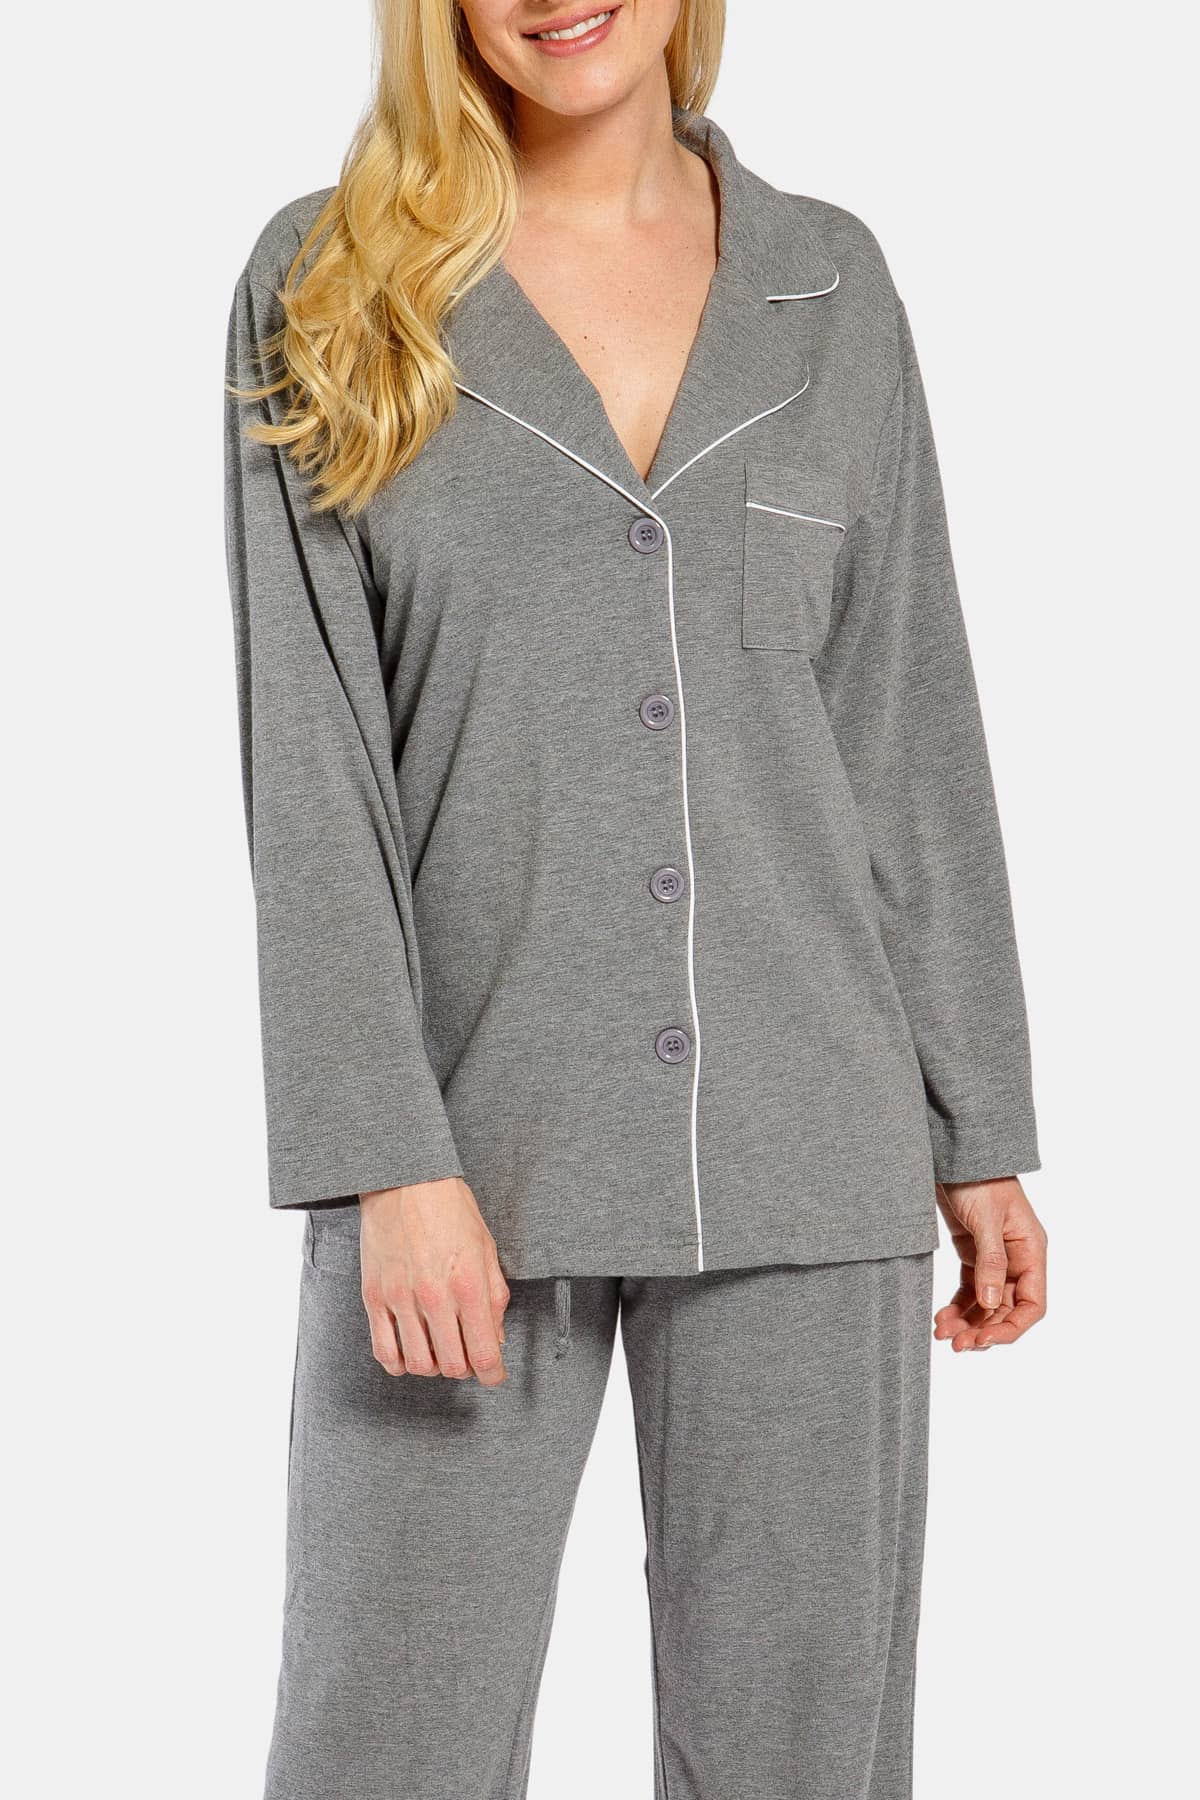 Women's Full Length Jersey Pajama Set with Gift Box Womens>Sleep and Lounge>Pajamas Fishers Finery 